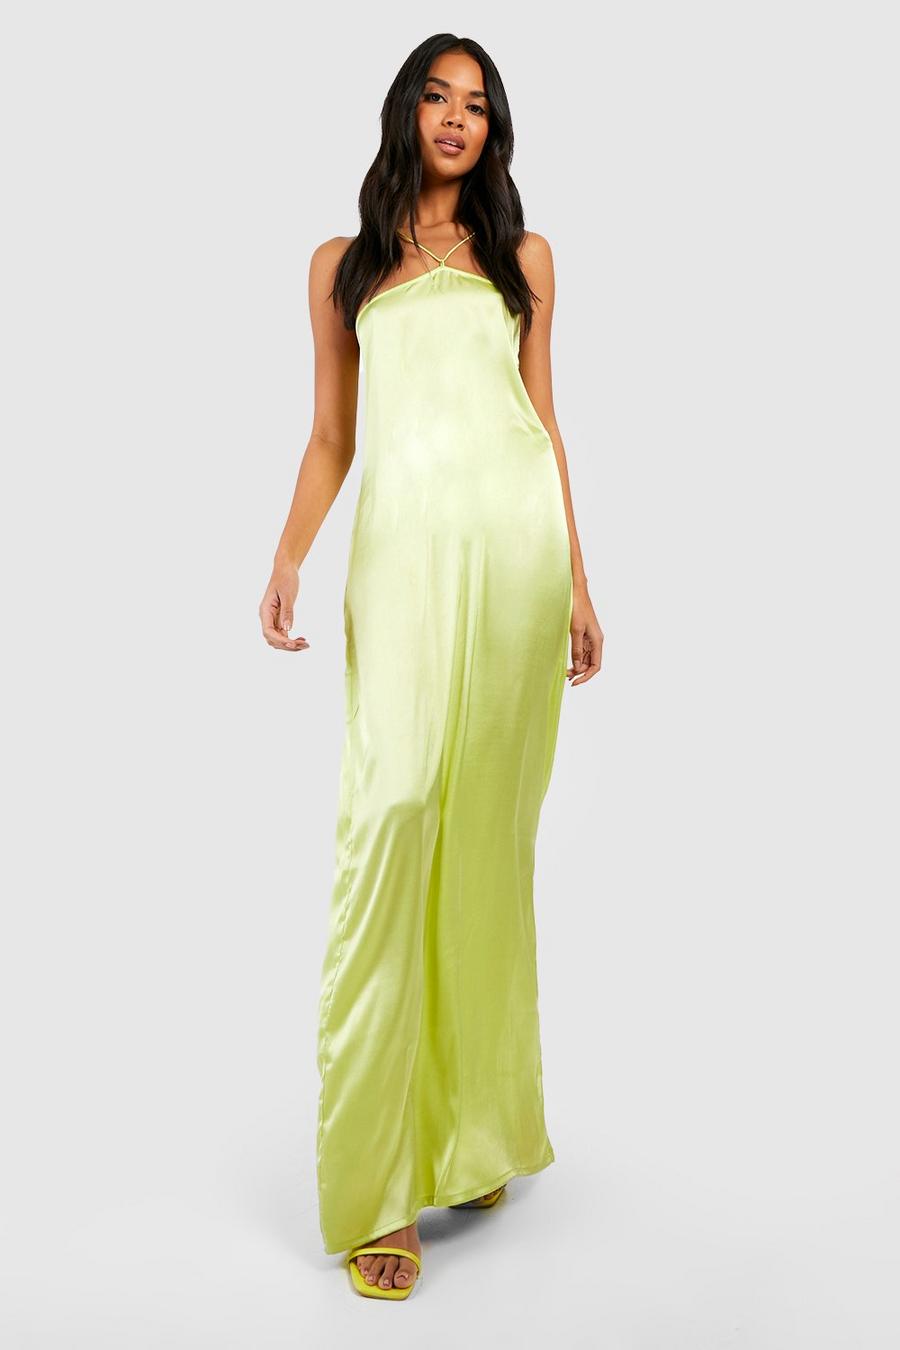 Chartreuse yellow Satin Halter Slip Dress